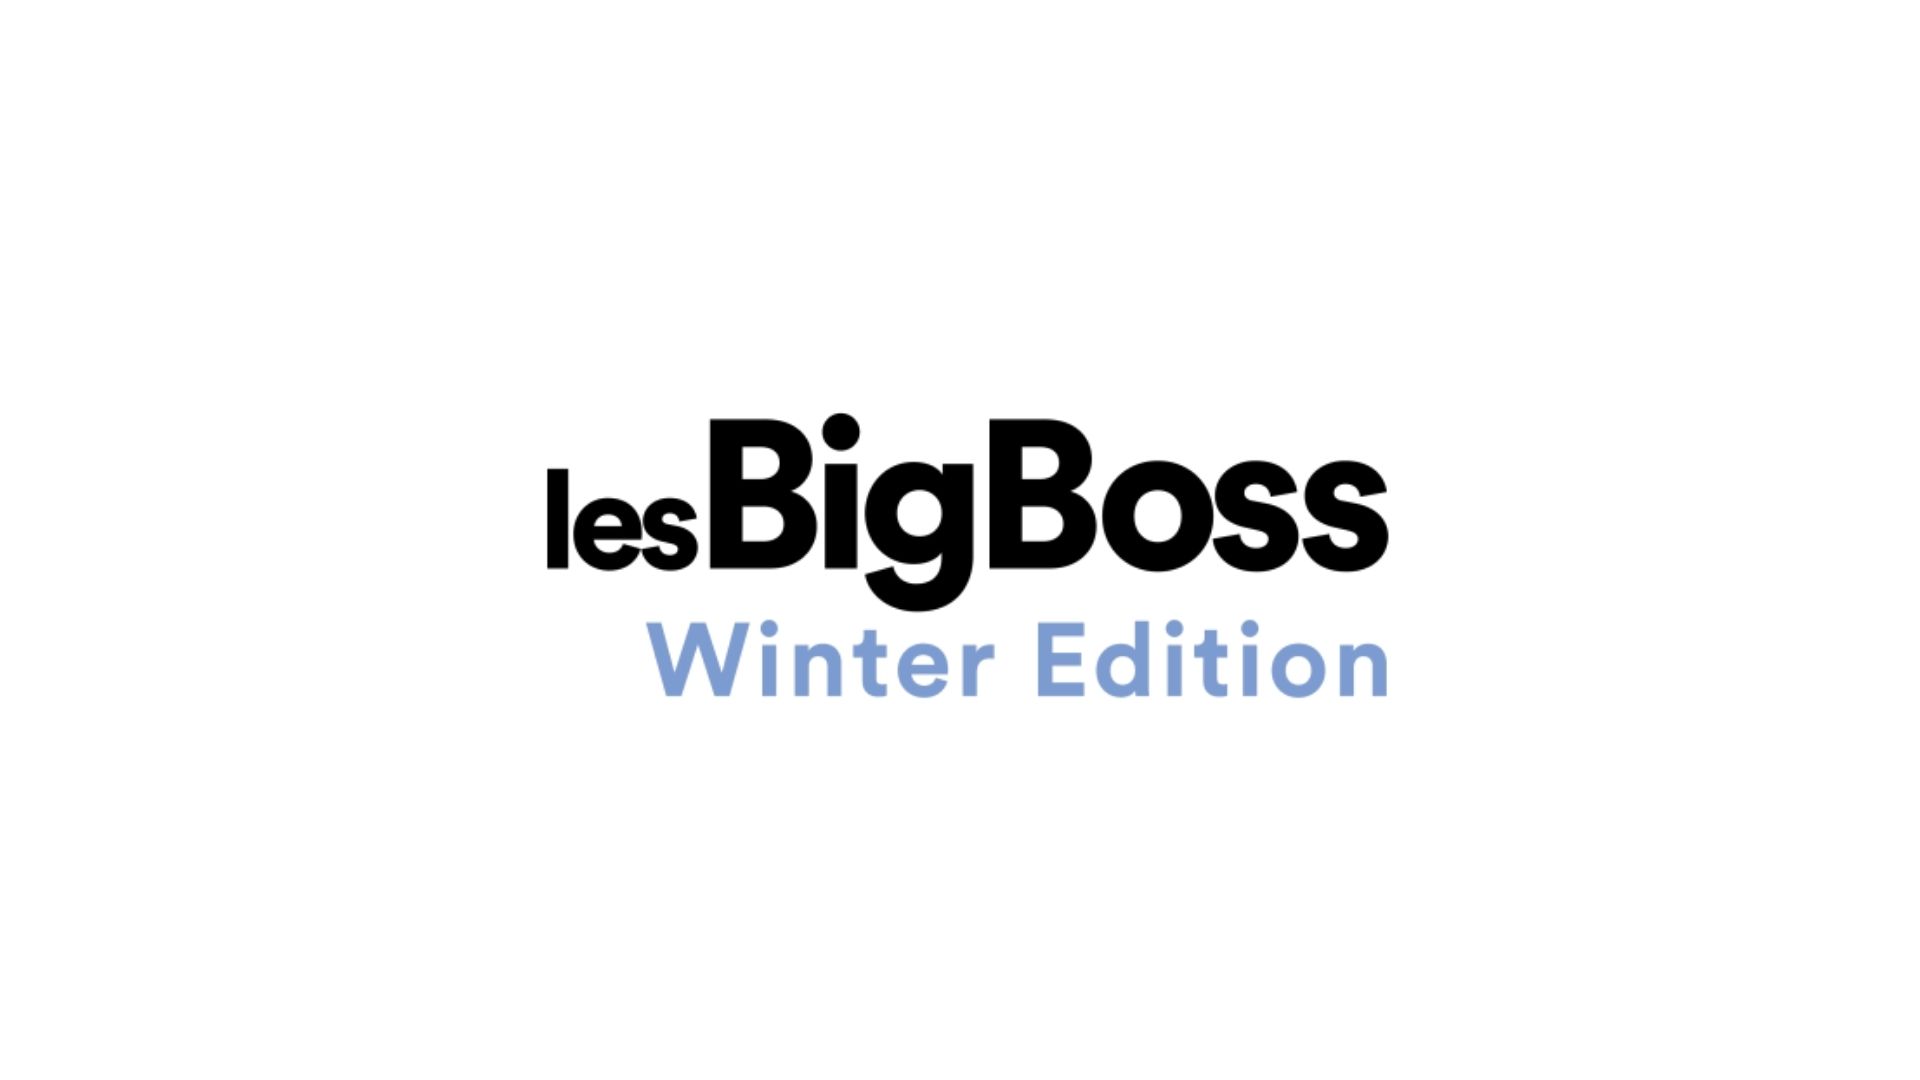 lesBigBoss winter edition